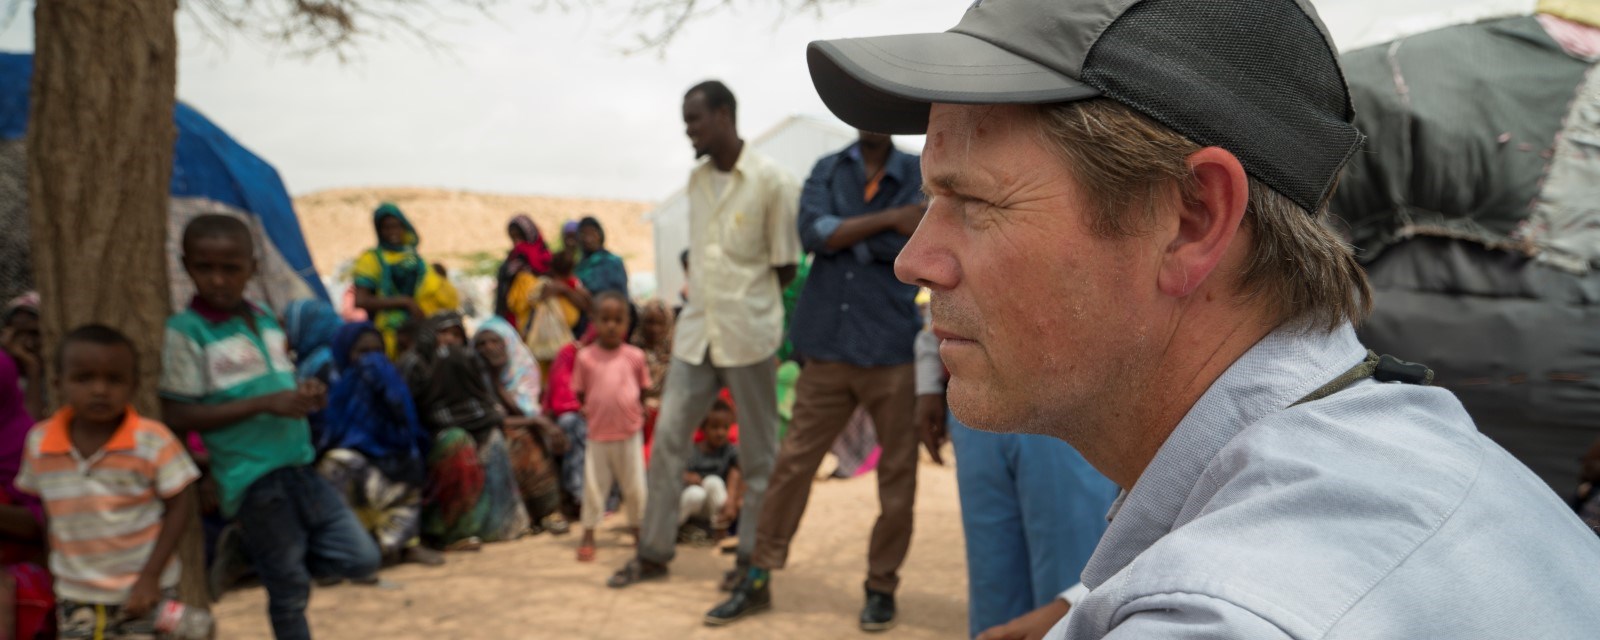 Bernt Apeland sitter i en landsby i Somalia, med barn som står rundt i en ring